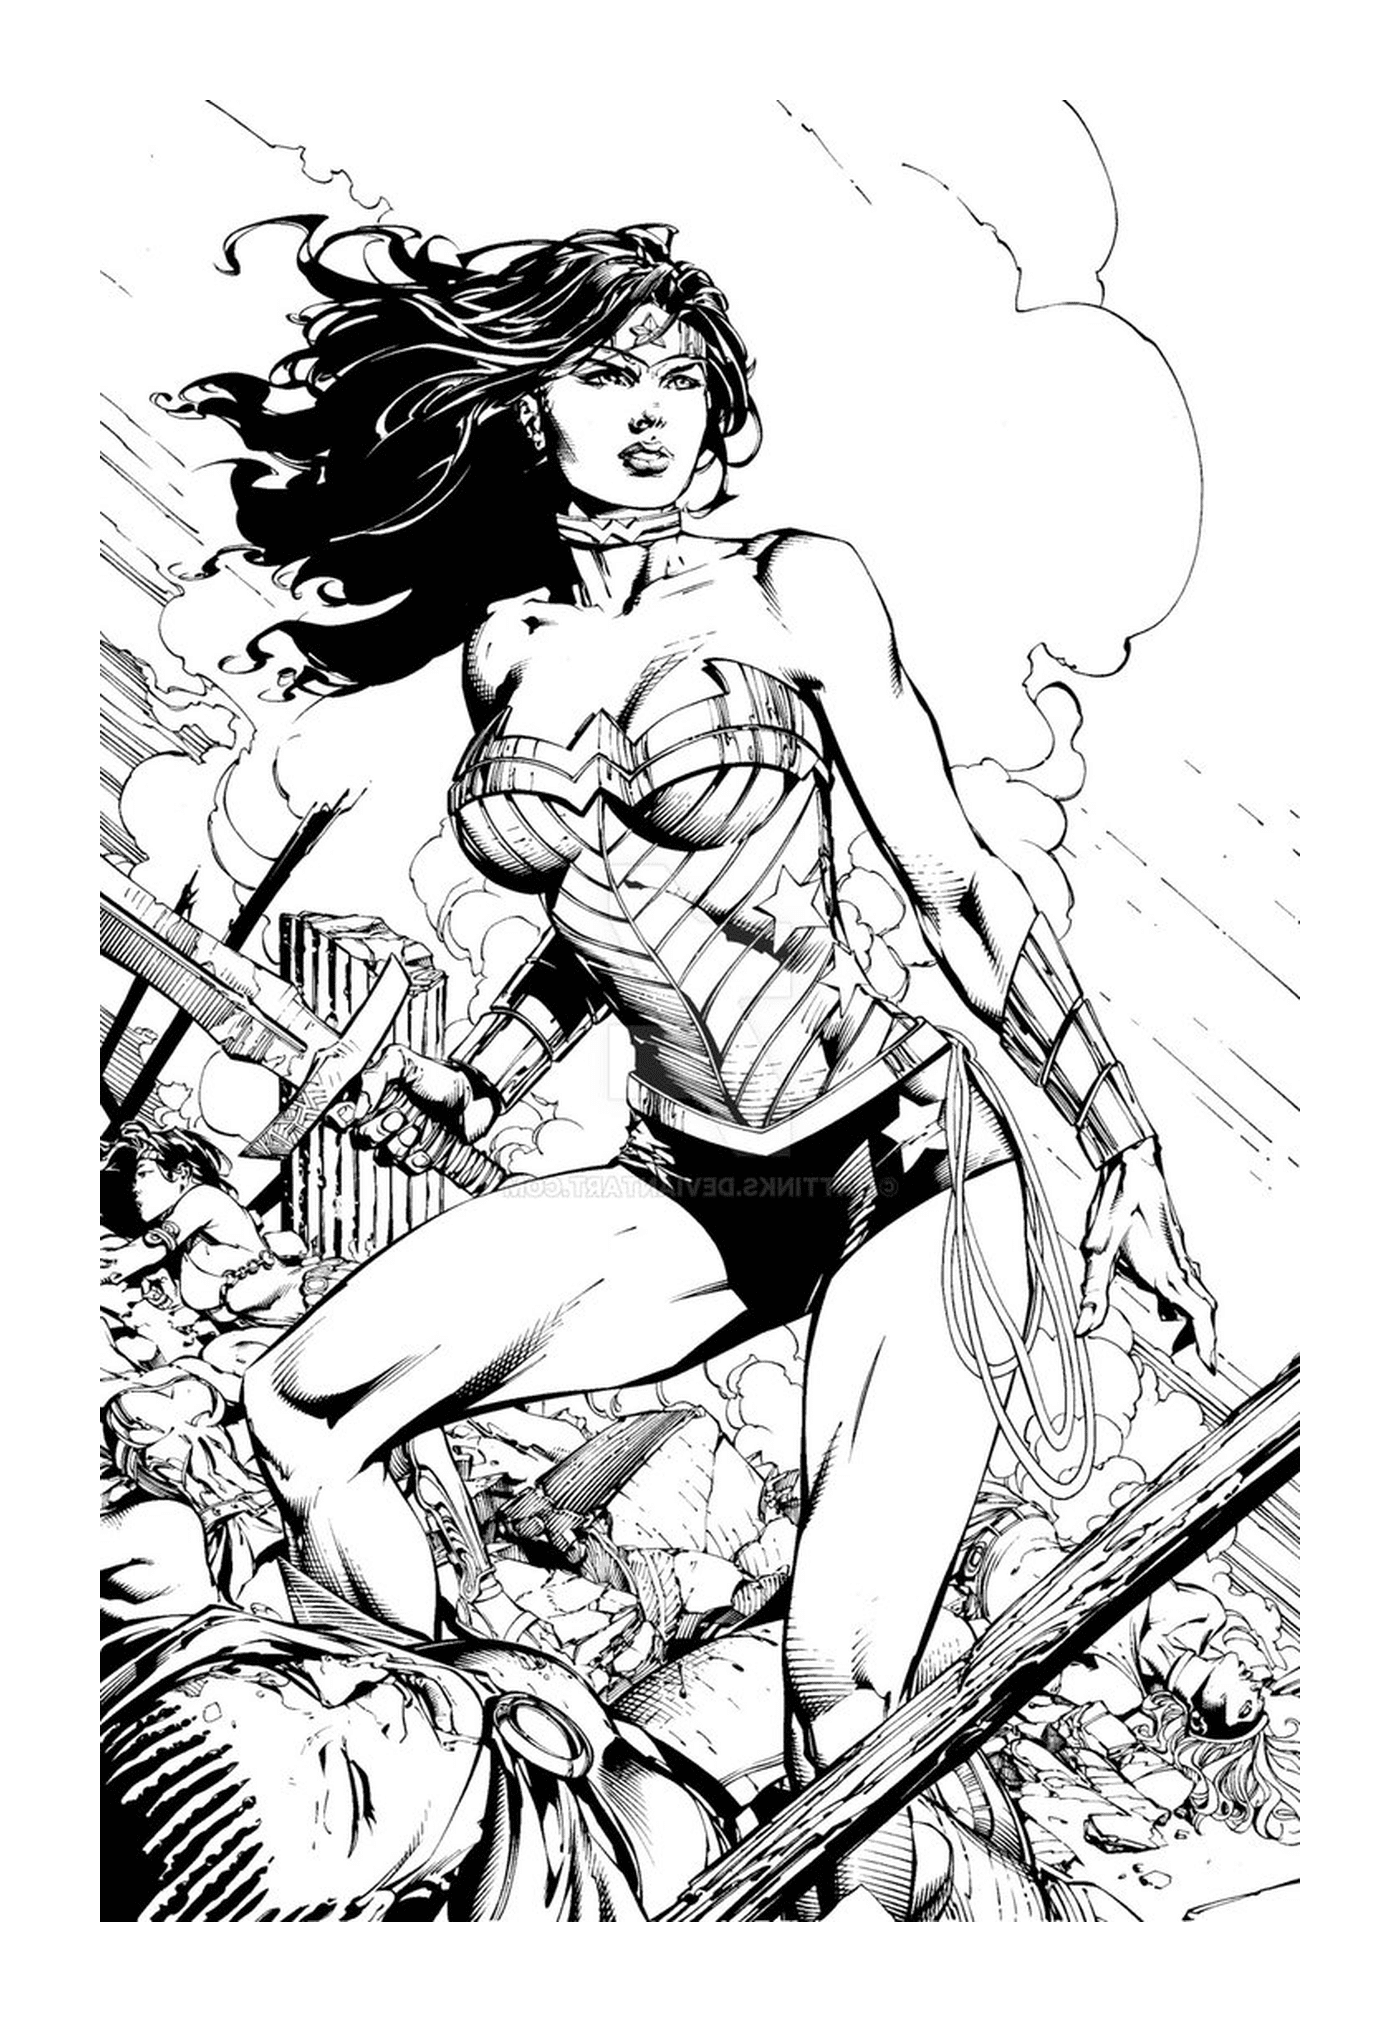  Wonder Woman by Battinks 